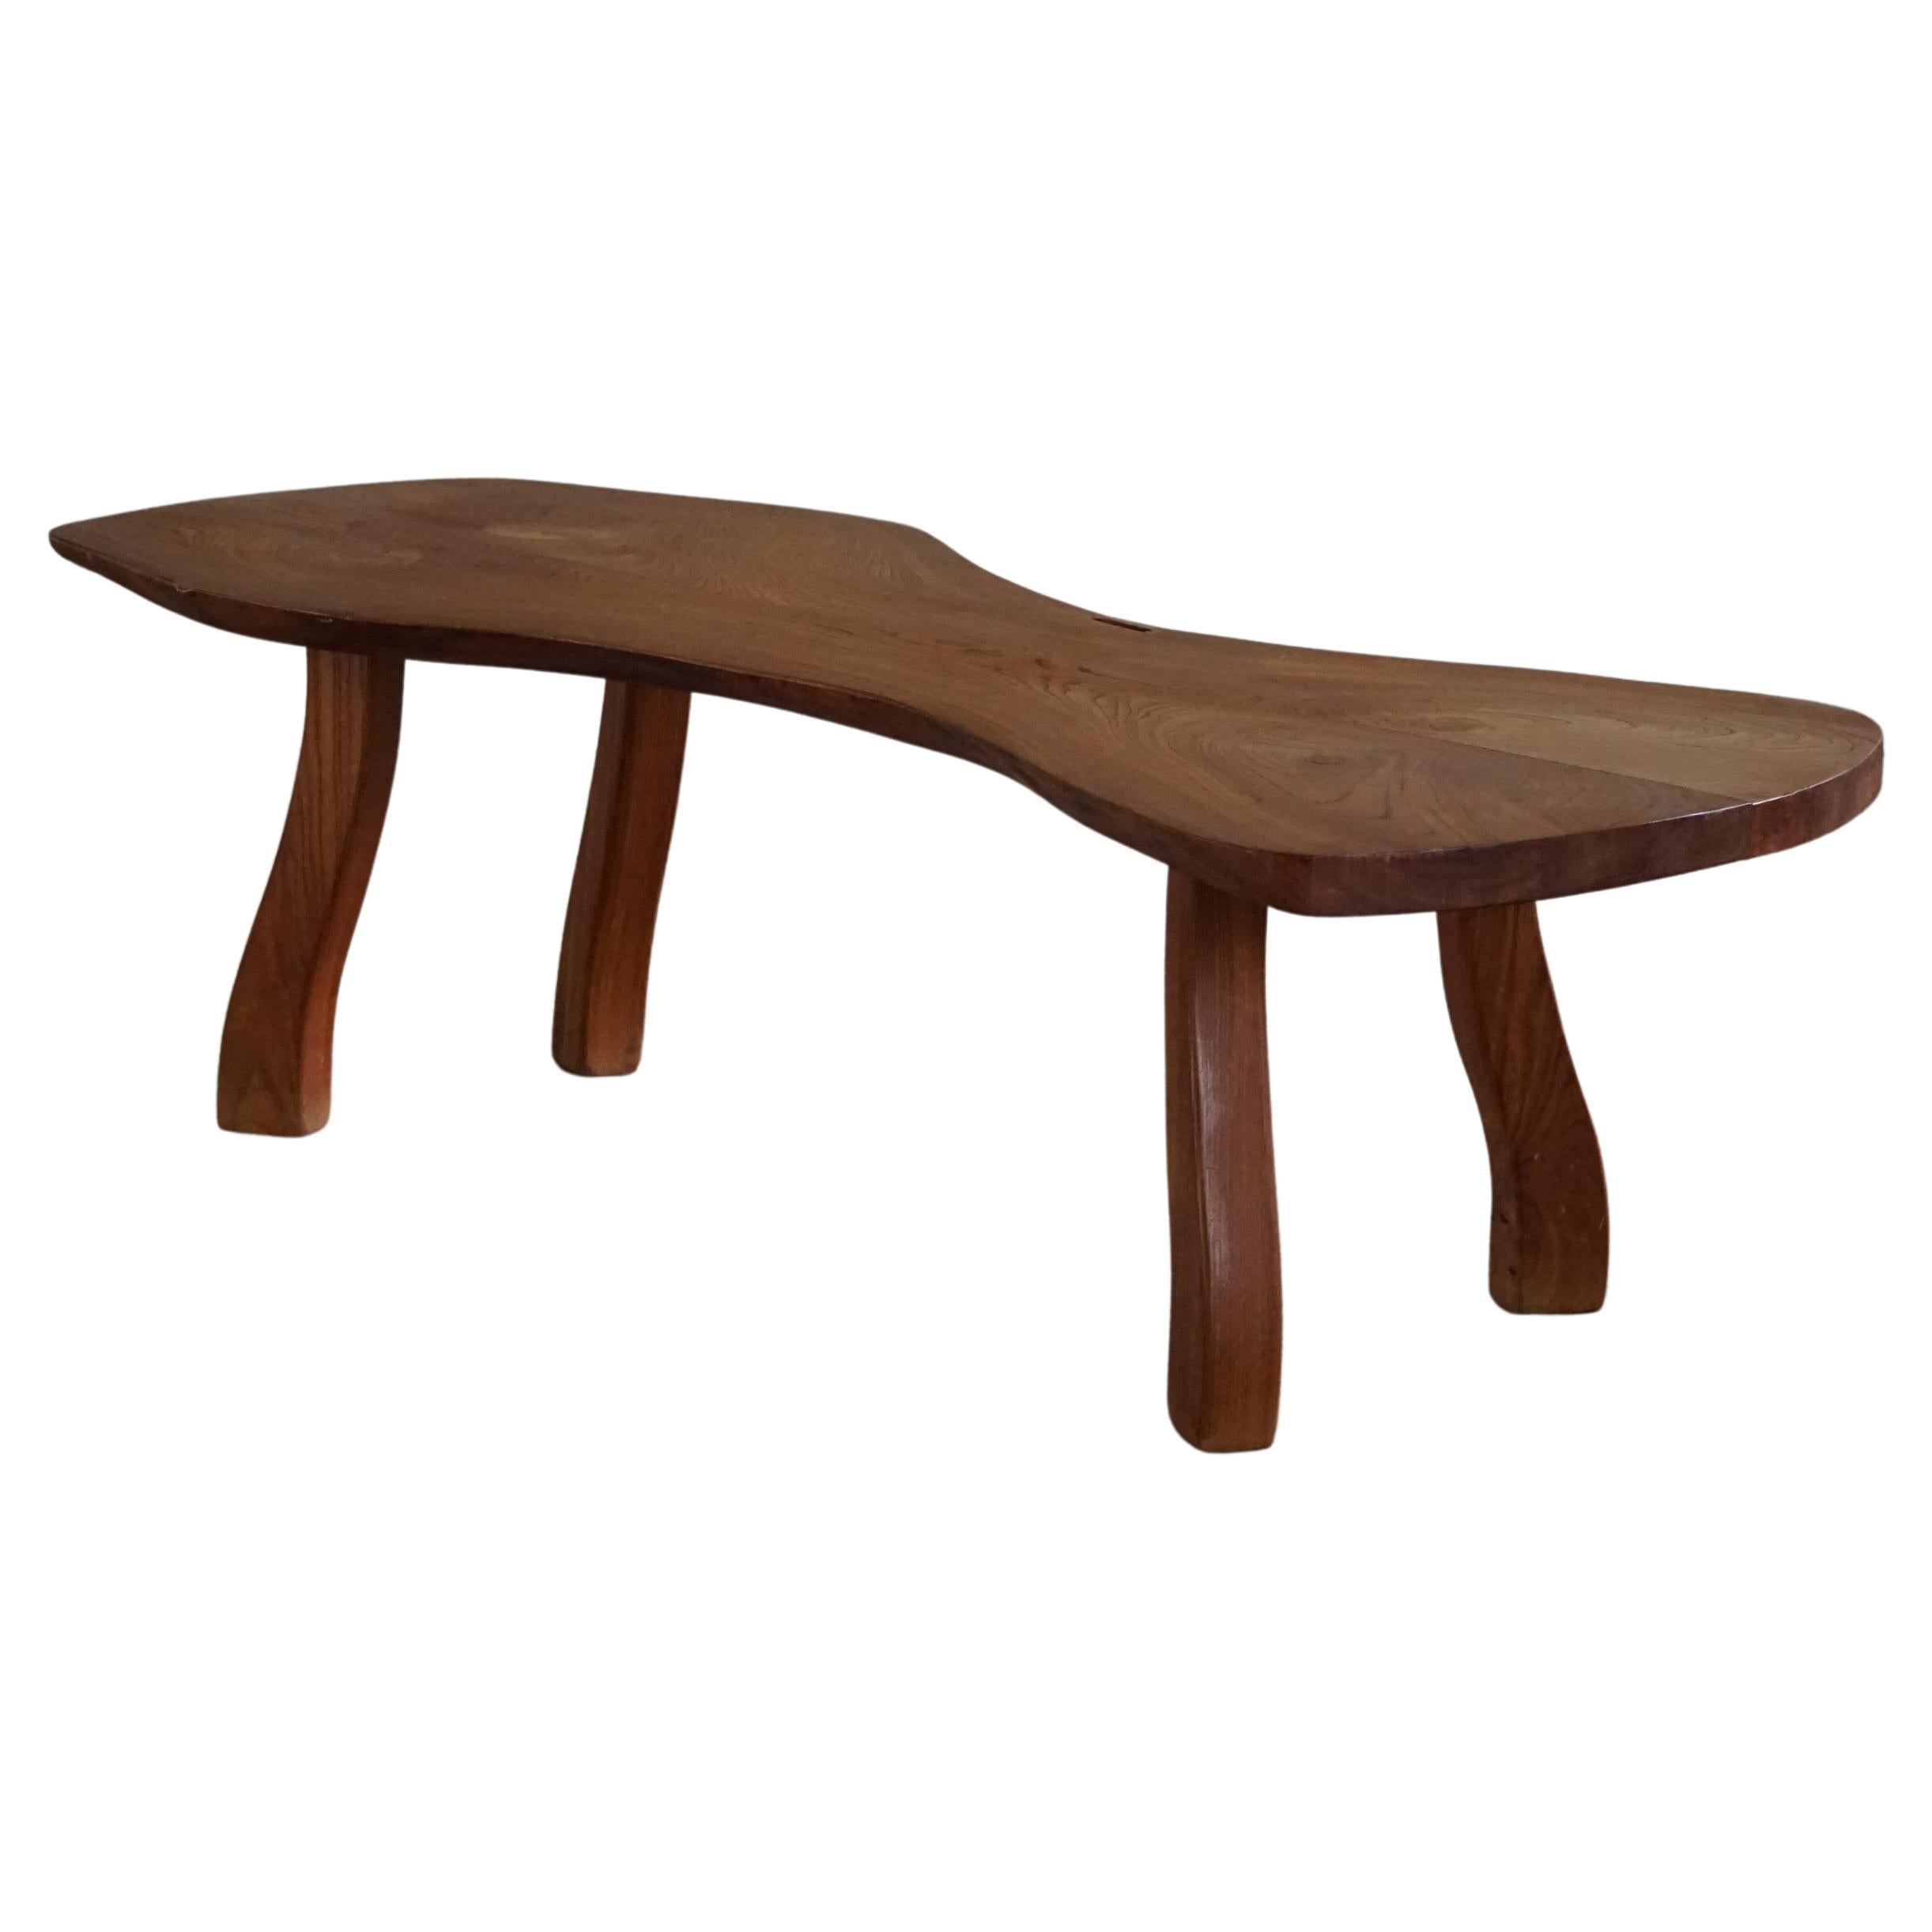 Swedish Modern, Organic Shaped Sofa Table in Elm by Carl-Axel Beijbom - 1968 For Sale